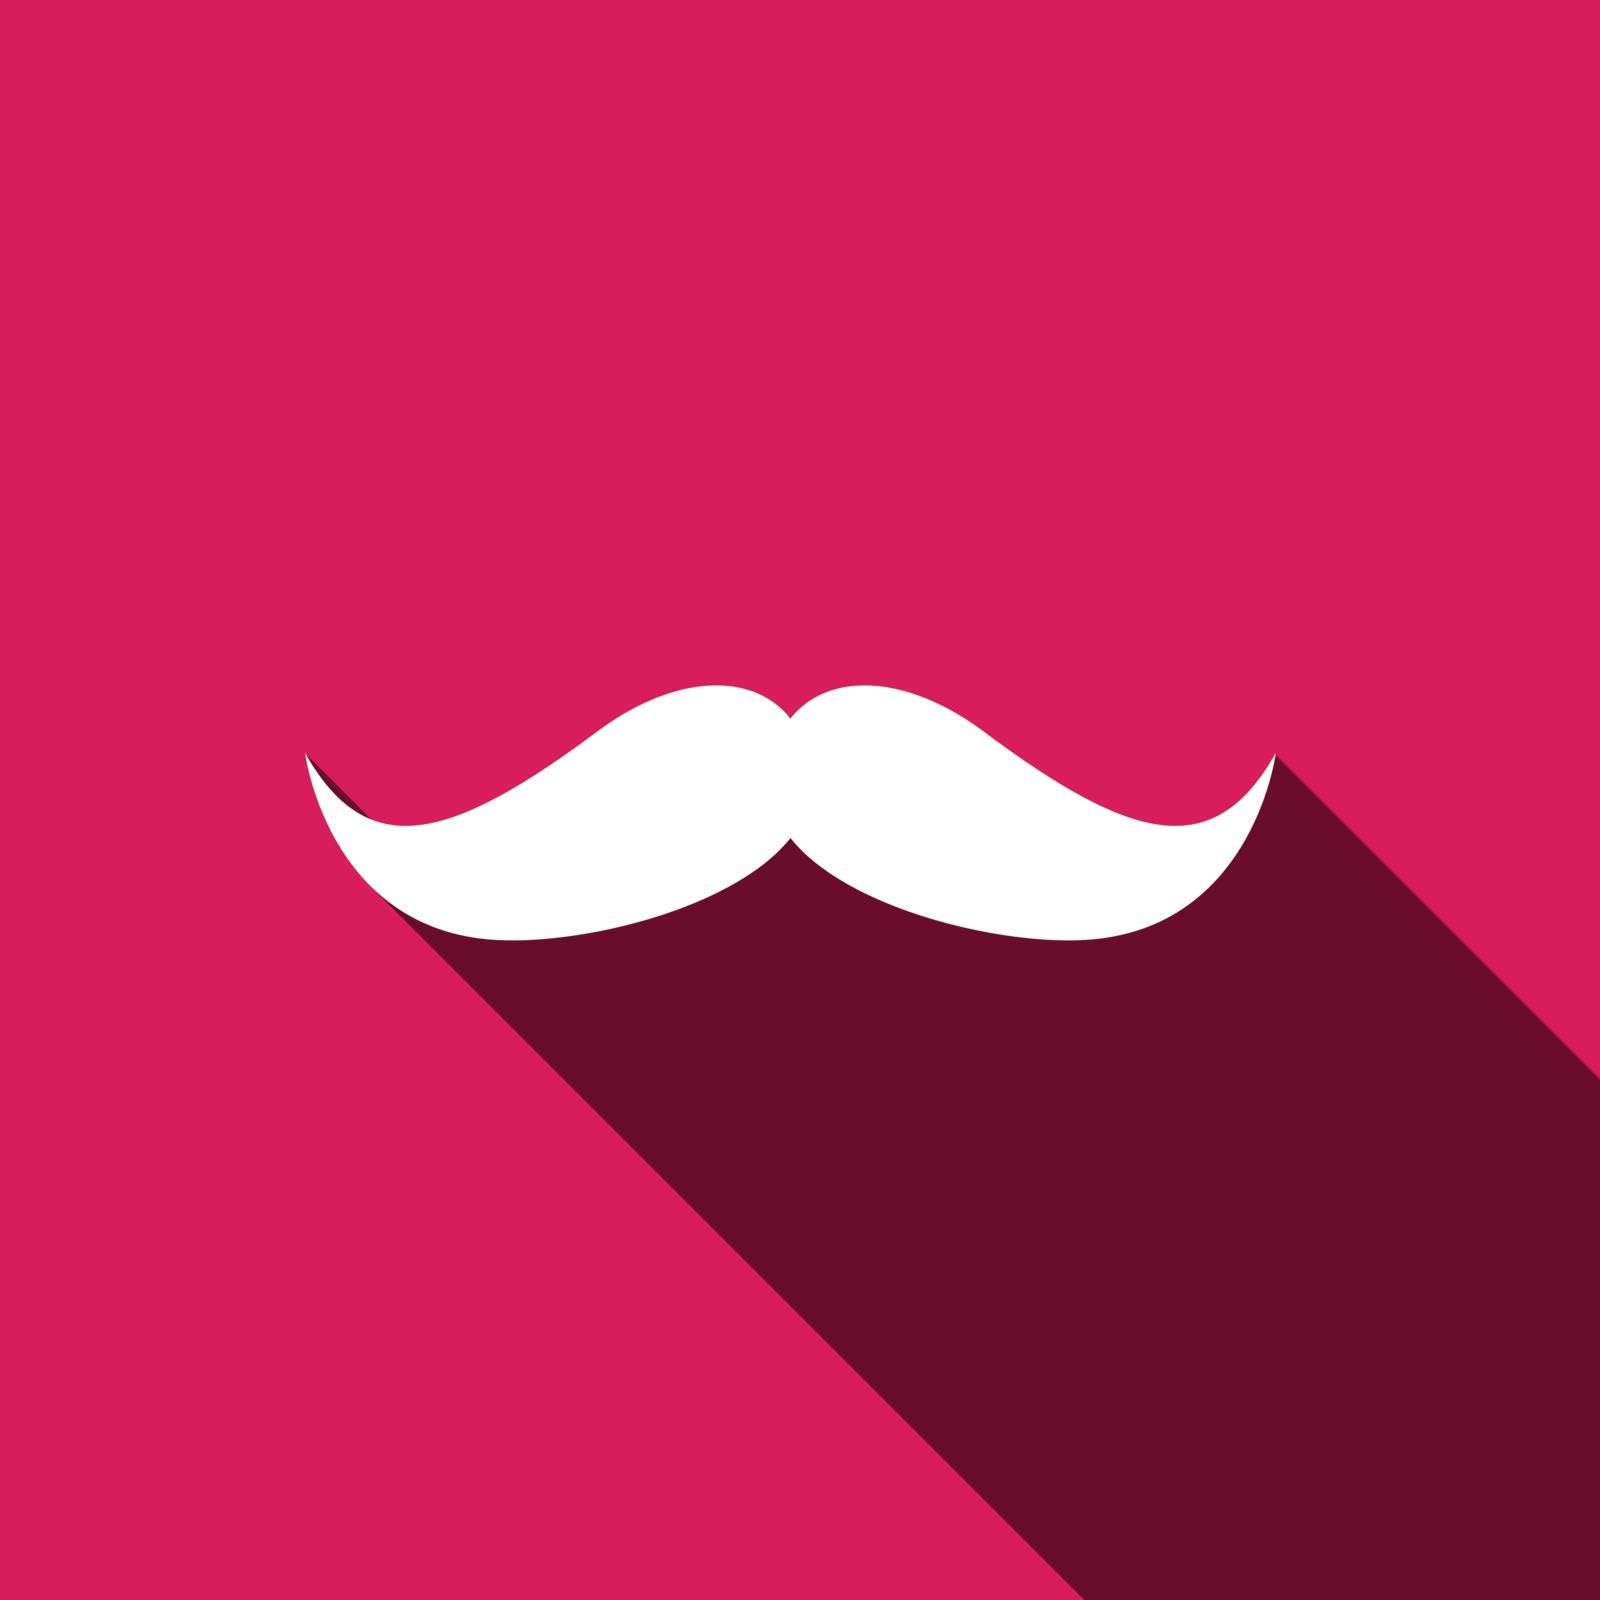 Retro mustache vector icon with long shadow